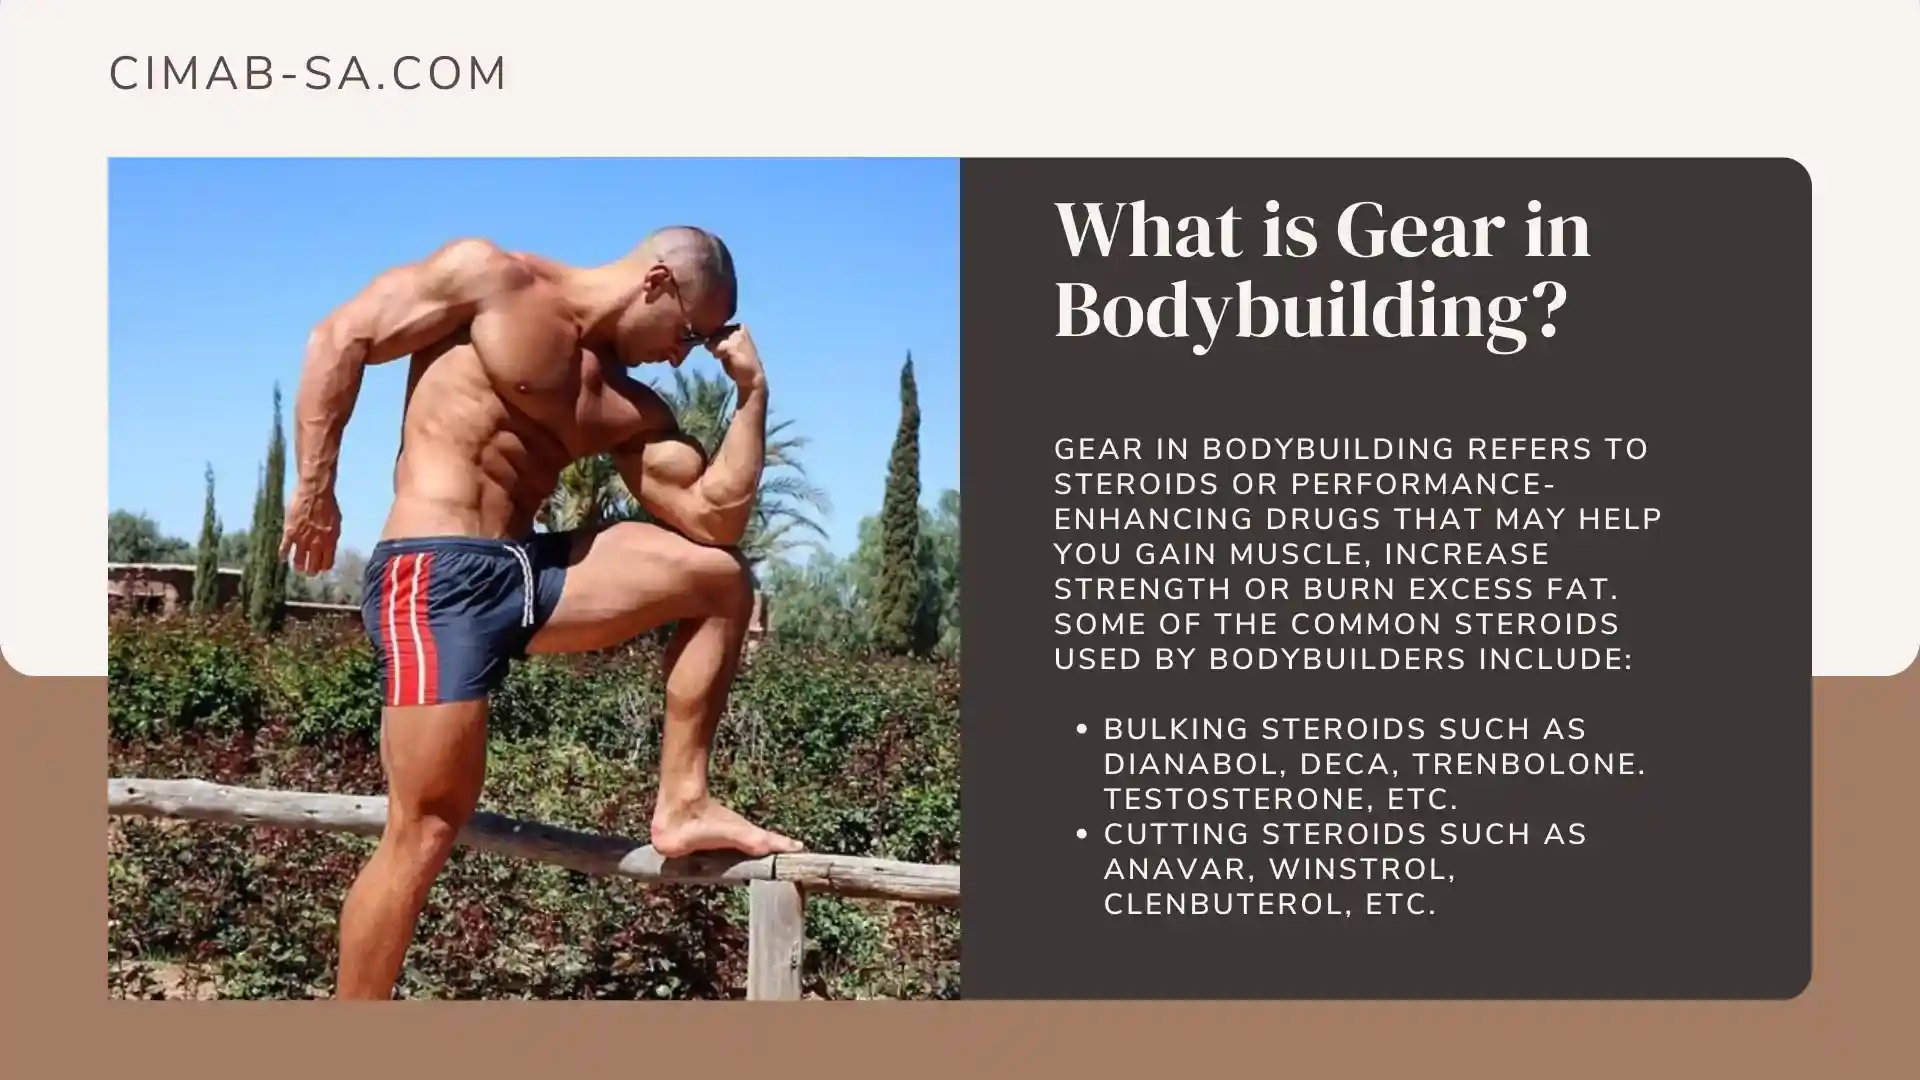 Gear in bodybuilding